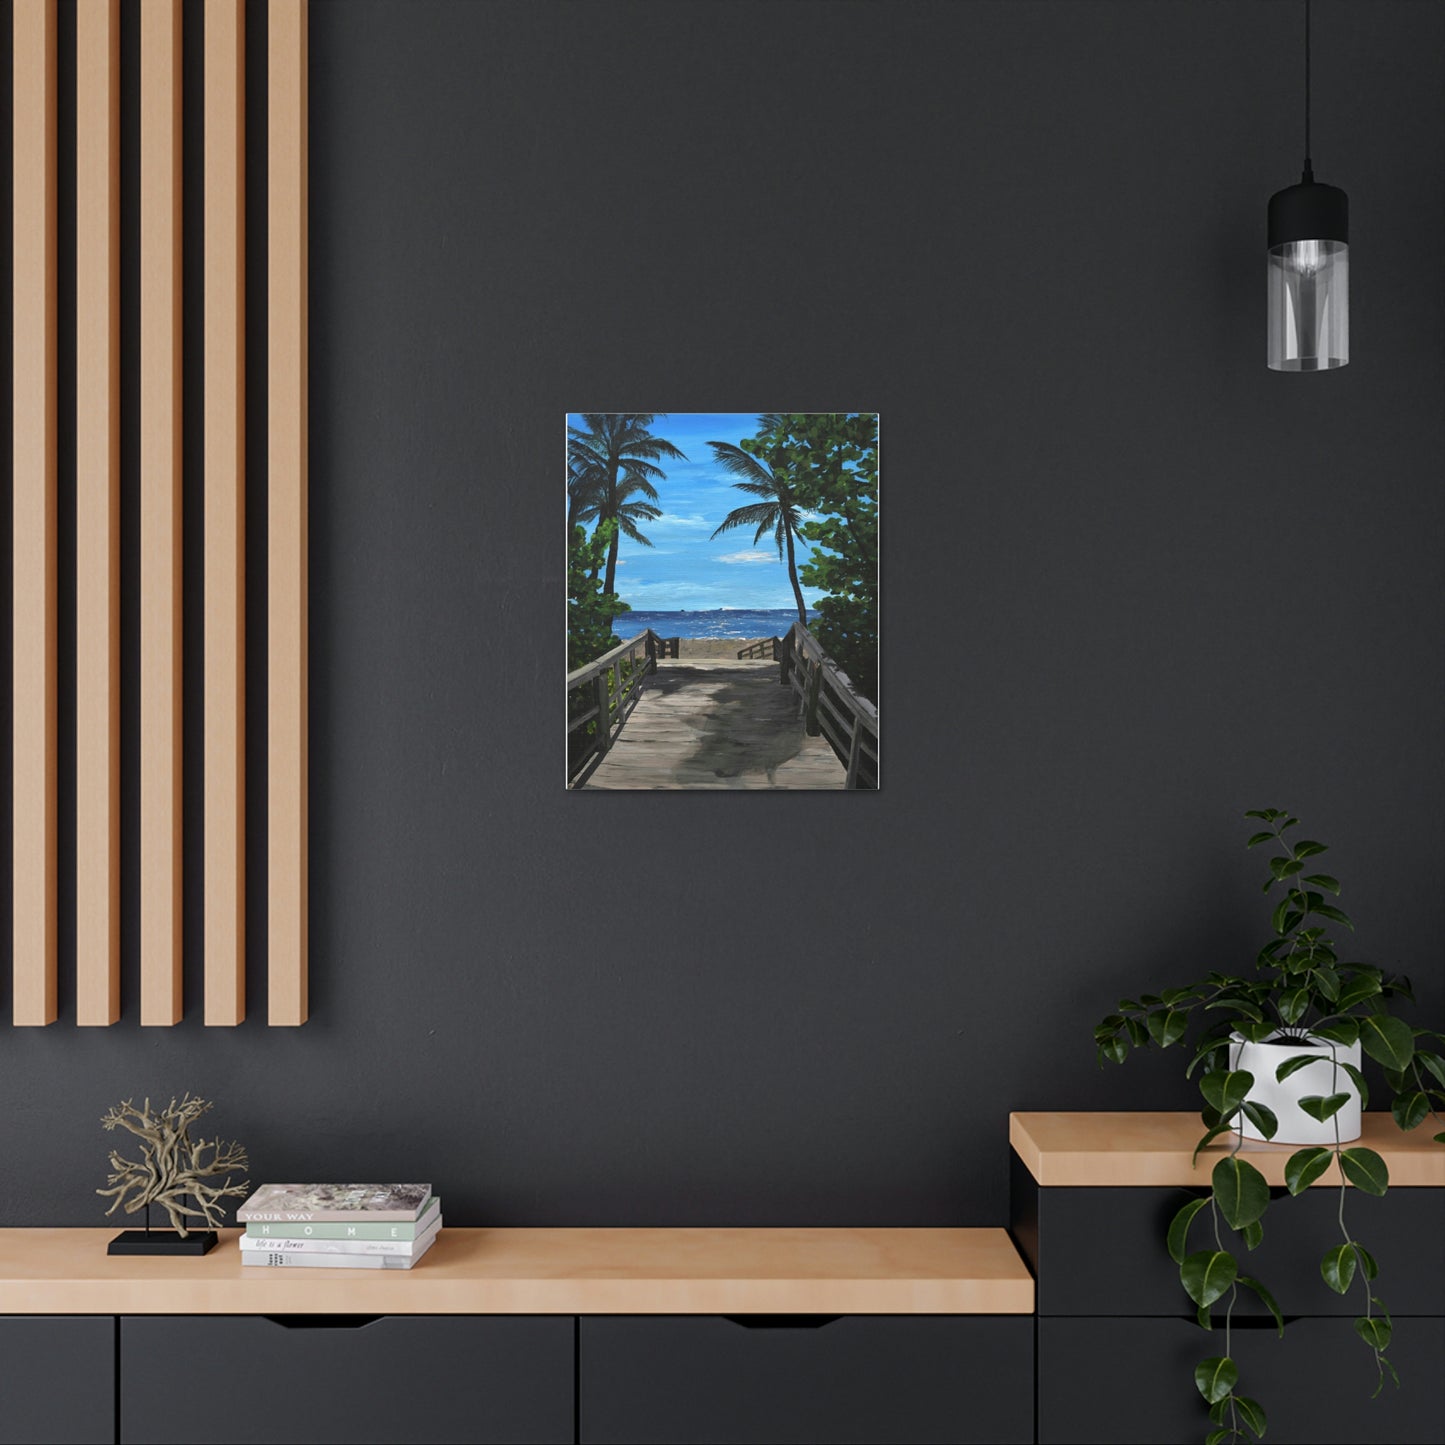 Serenity (Print) - Painting on canvas Beach landscape, palm trees, ocean, seashore, beach house clearwater beach painting Krystalmichelleart